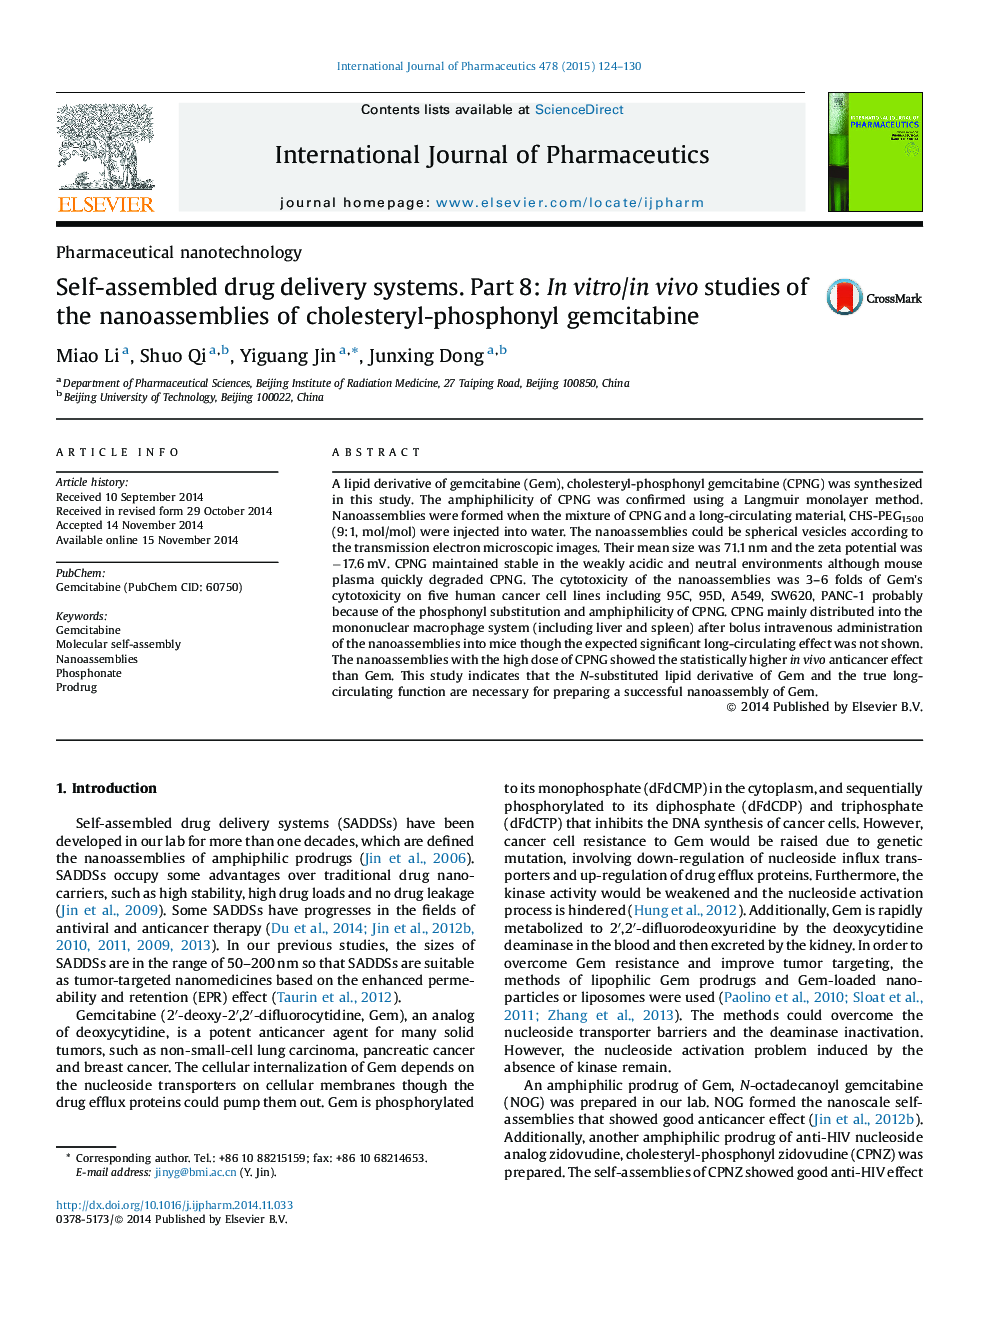 Self-assembled drug delivery systems. Part 8: In vitro/in vivo studies of the nanoassemblies of cholesteryl-phosphonyl gemcitabine